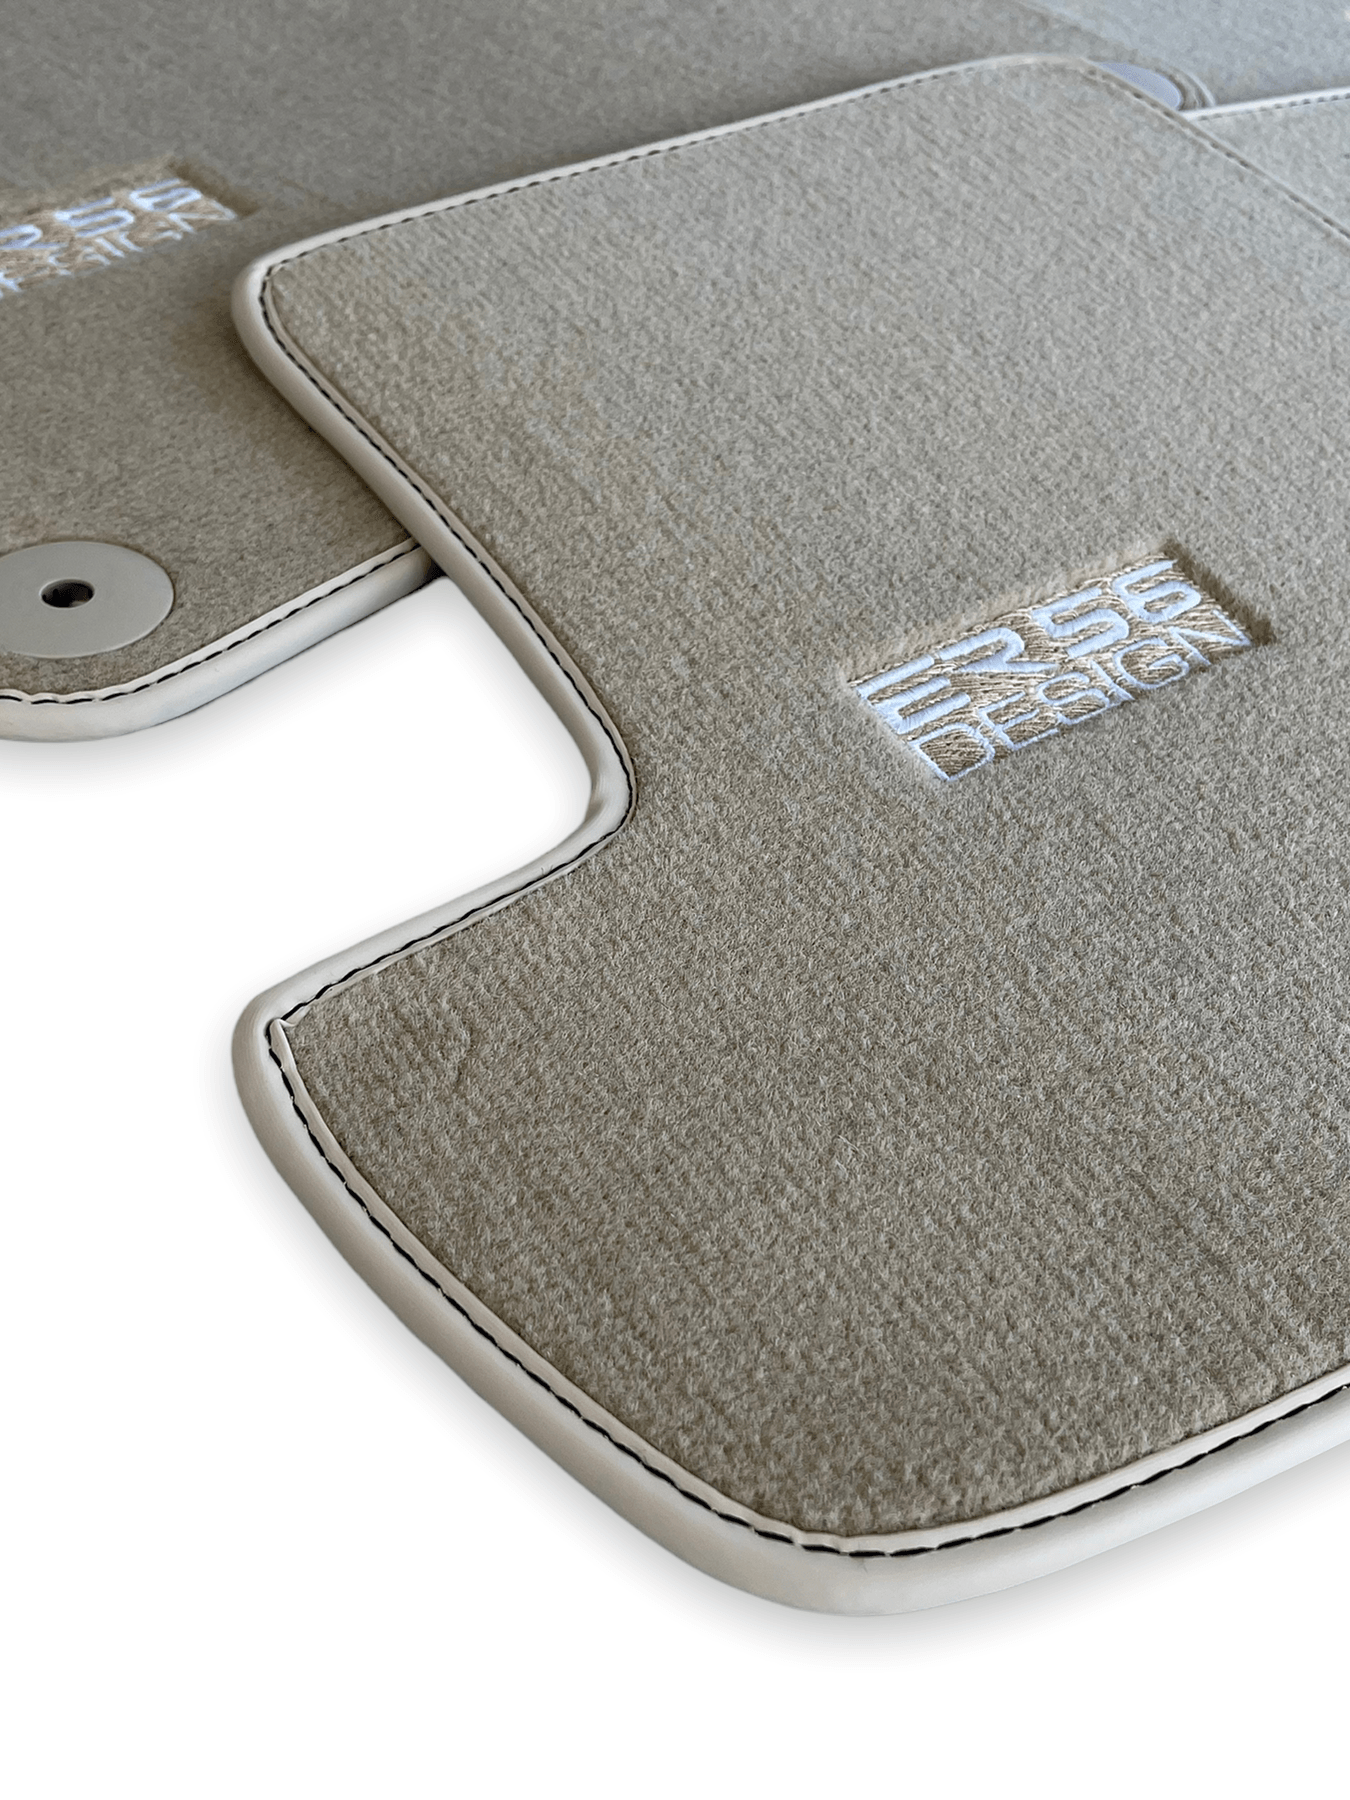 Beige Floor Mats for Porsche Cayenne (2003-2010) | ER56 Design - AutoWin